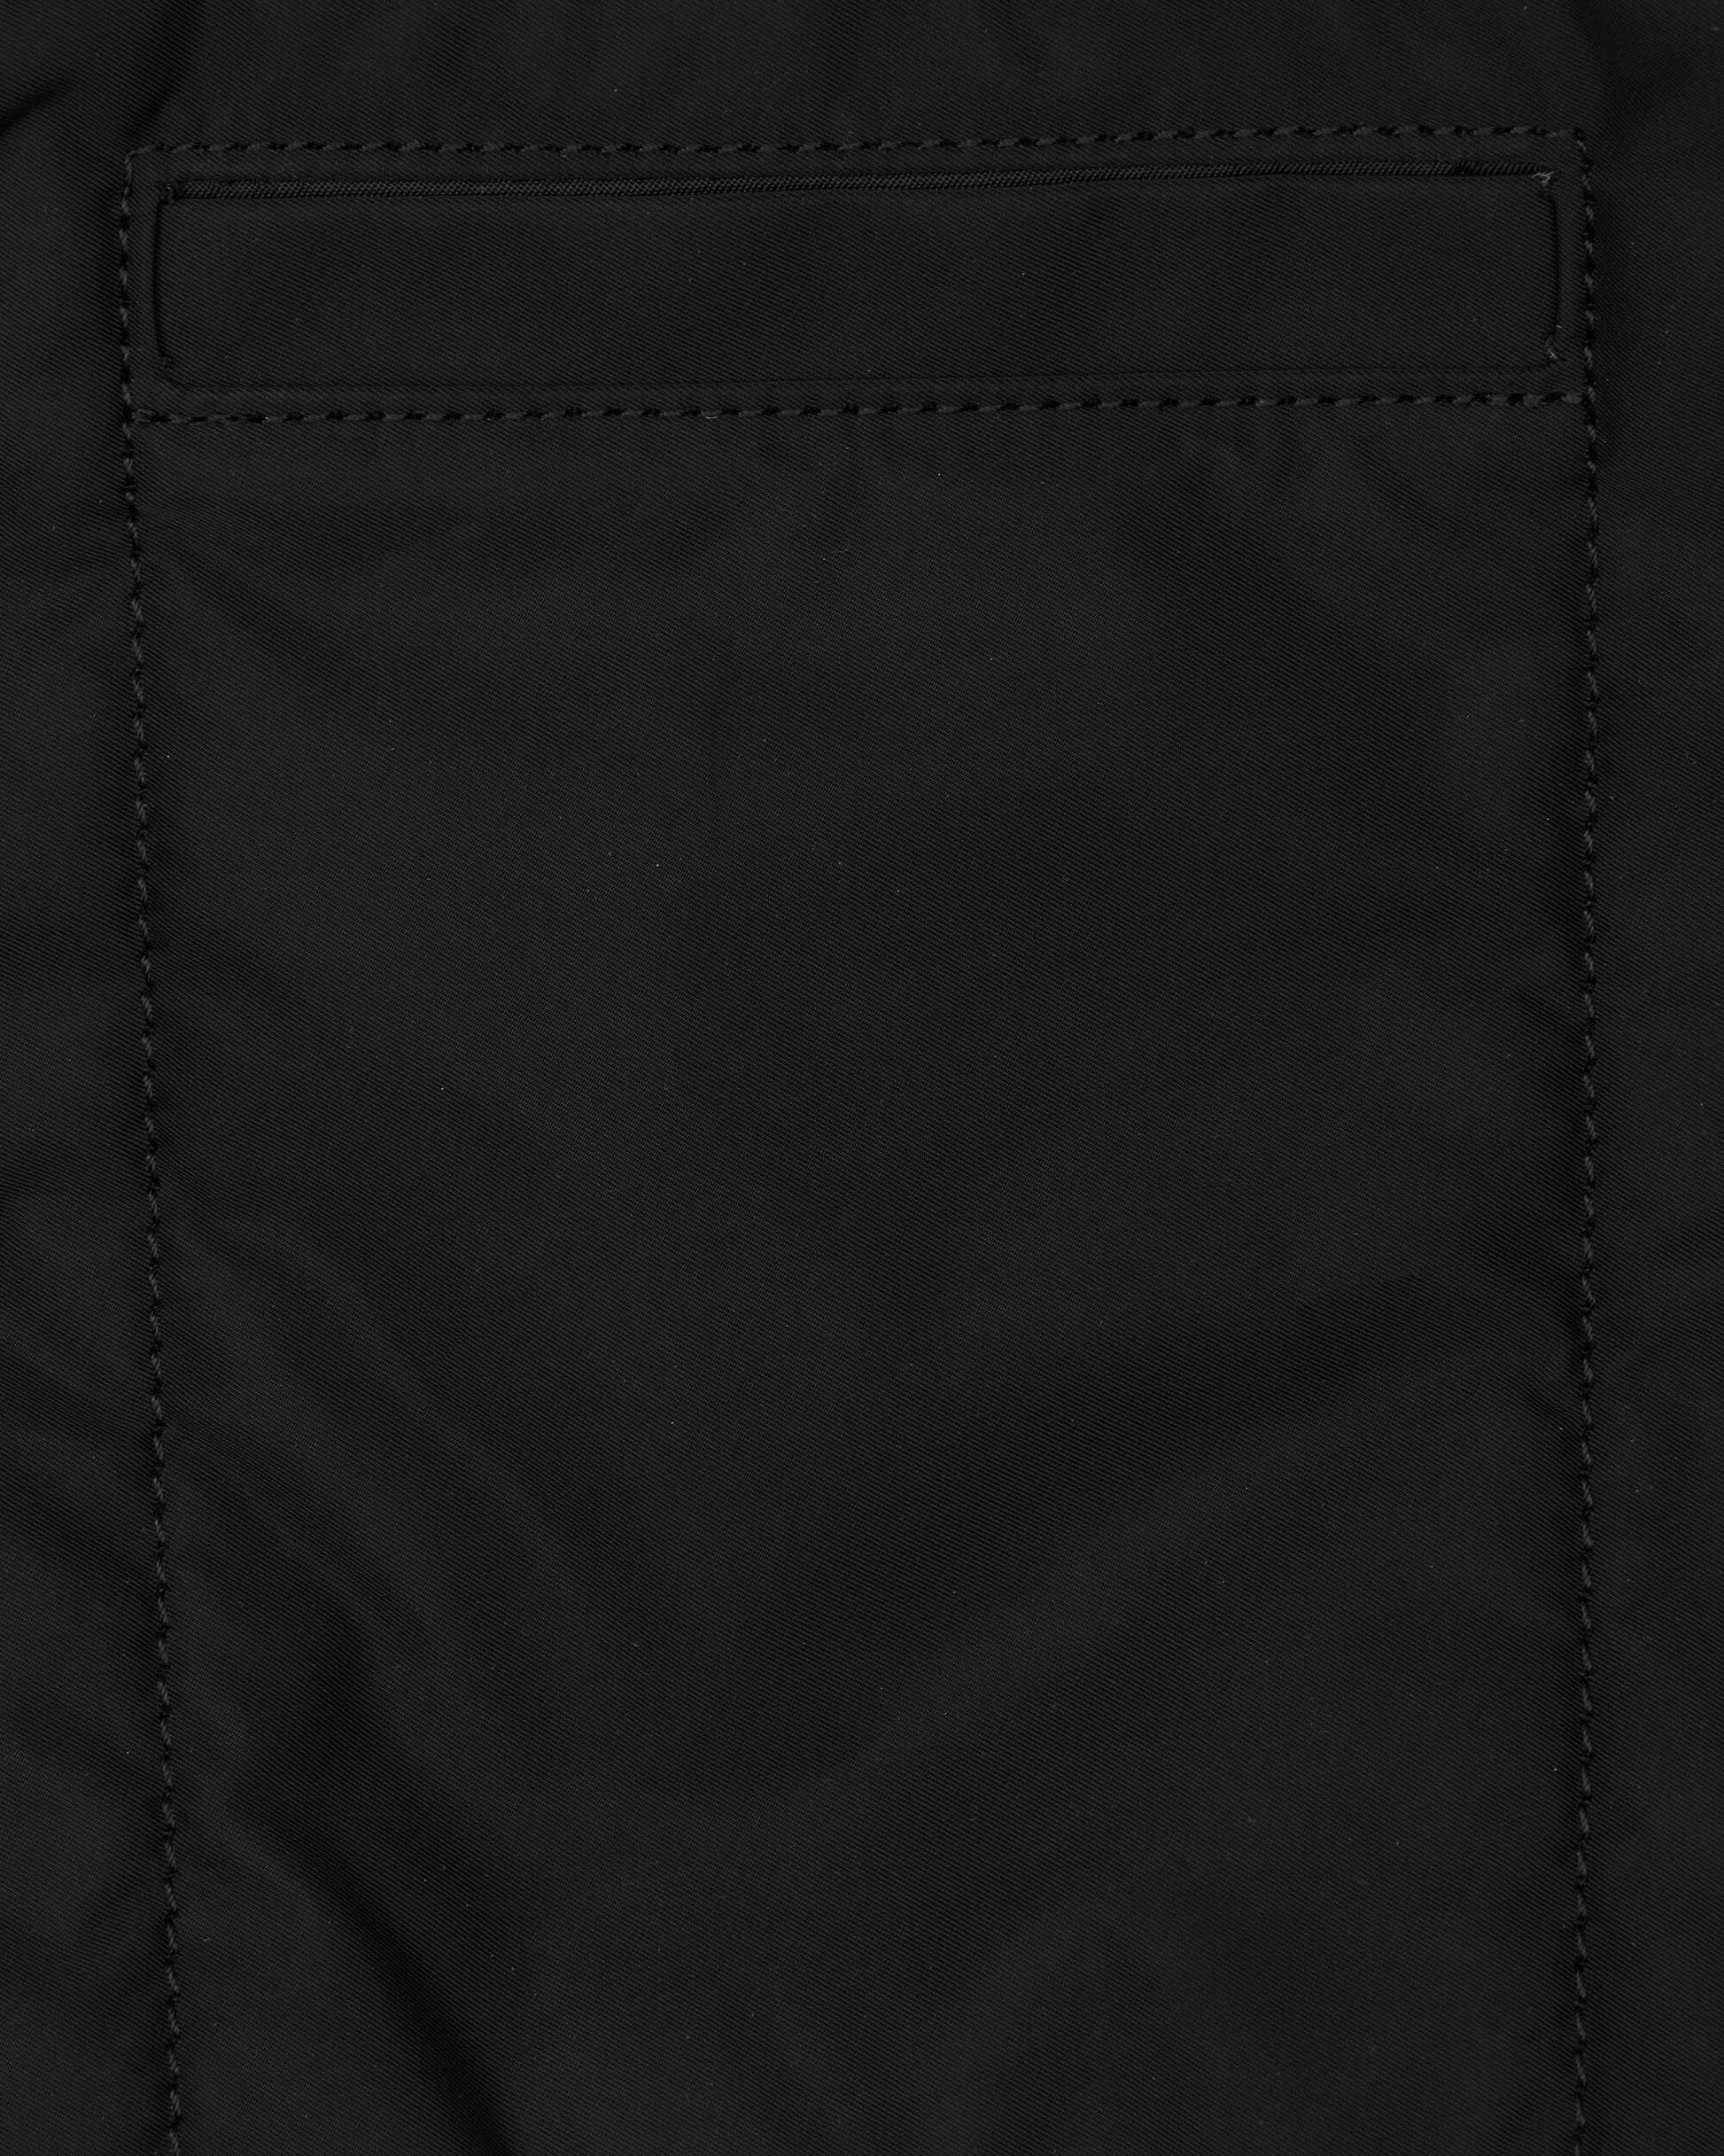 Ramidus Square Shoulder Bag Black Bags and Backpacks Shoulder Bags B011094 001